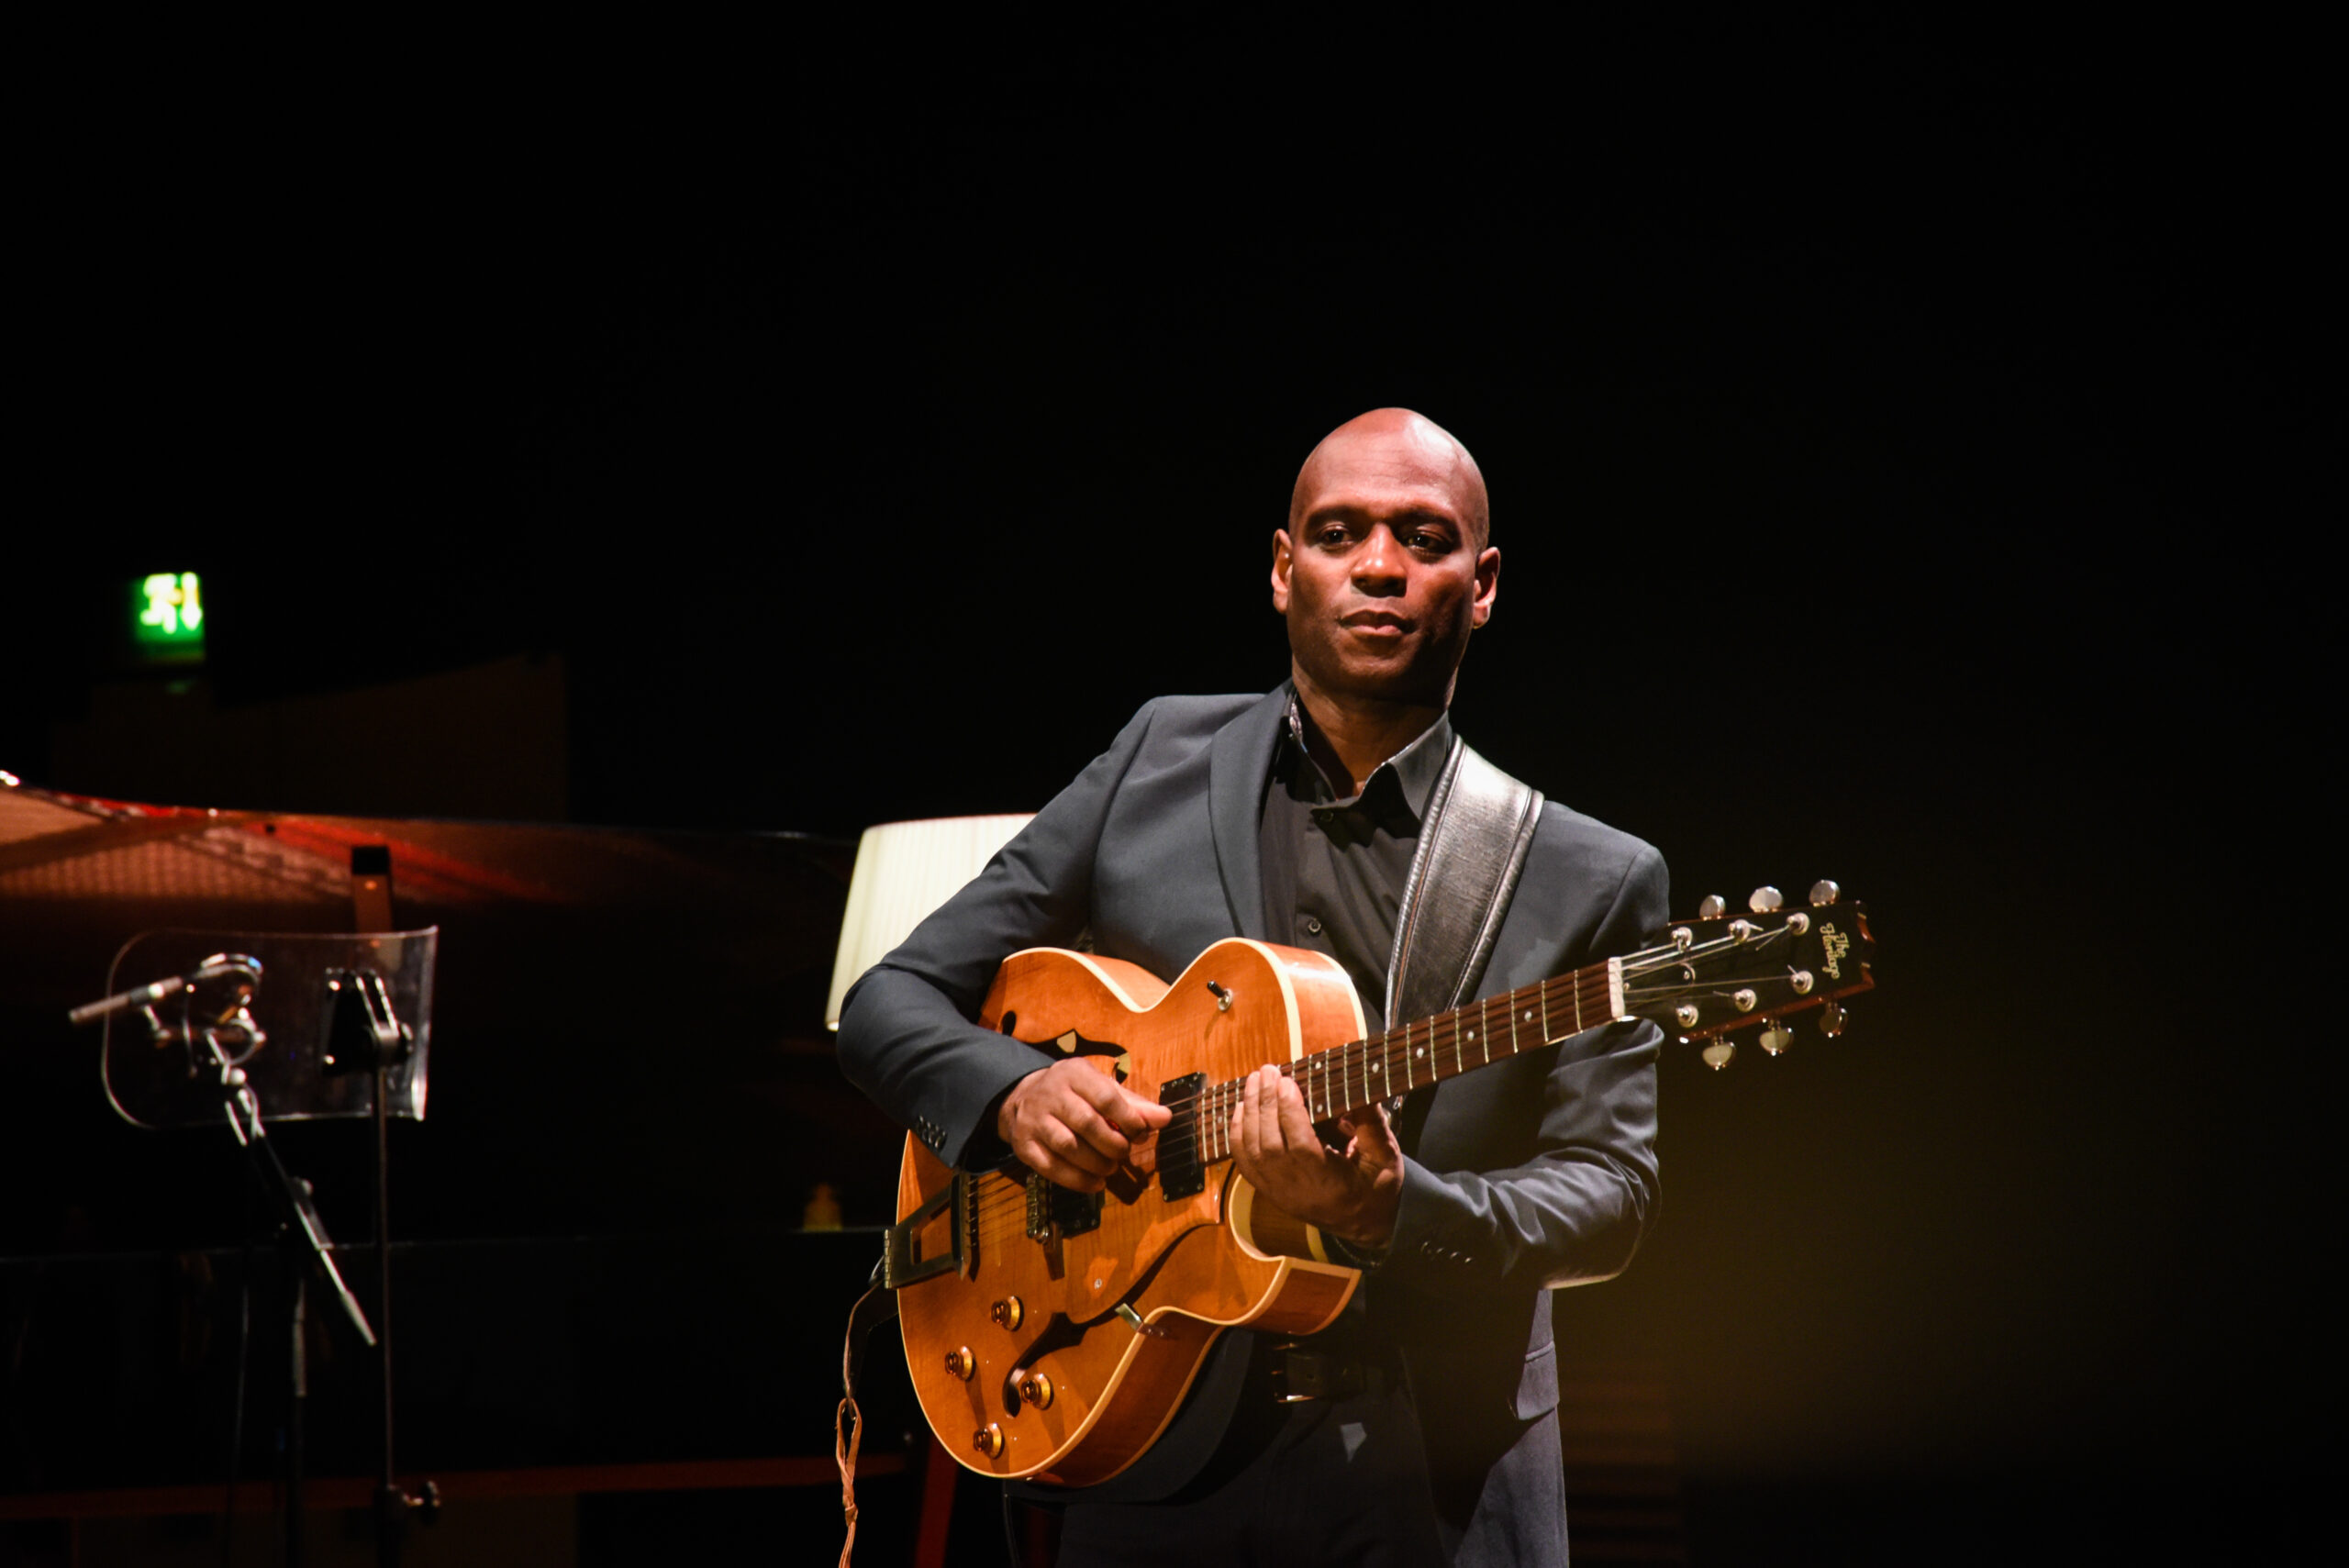 Musician Edison Herbert plays a guitar against a black backdrop